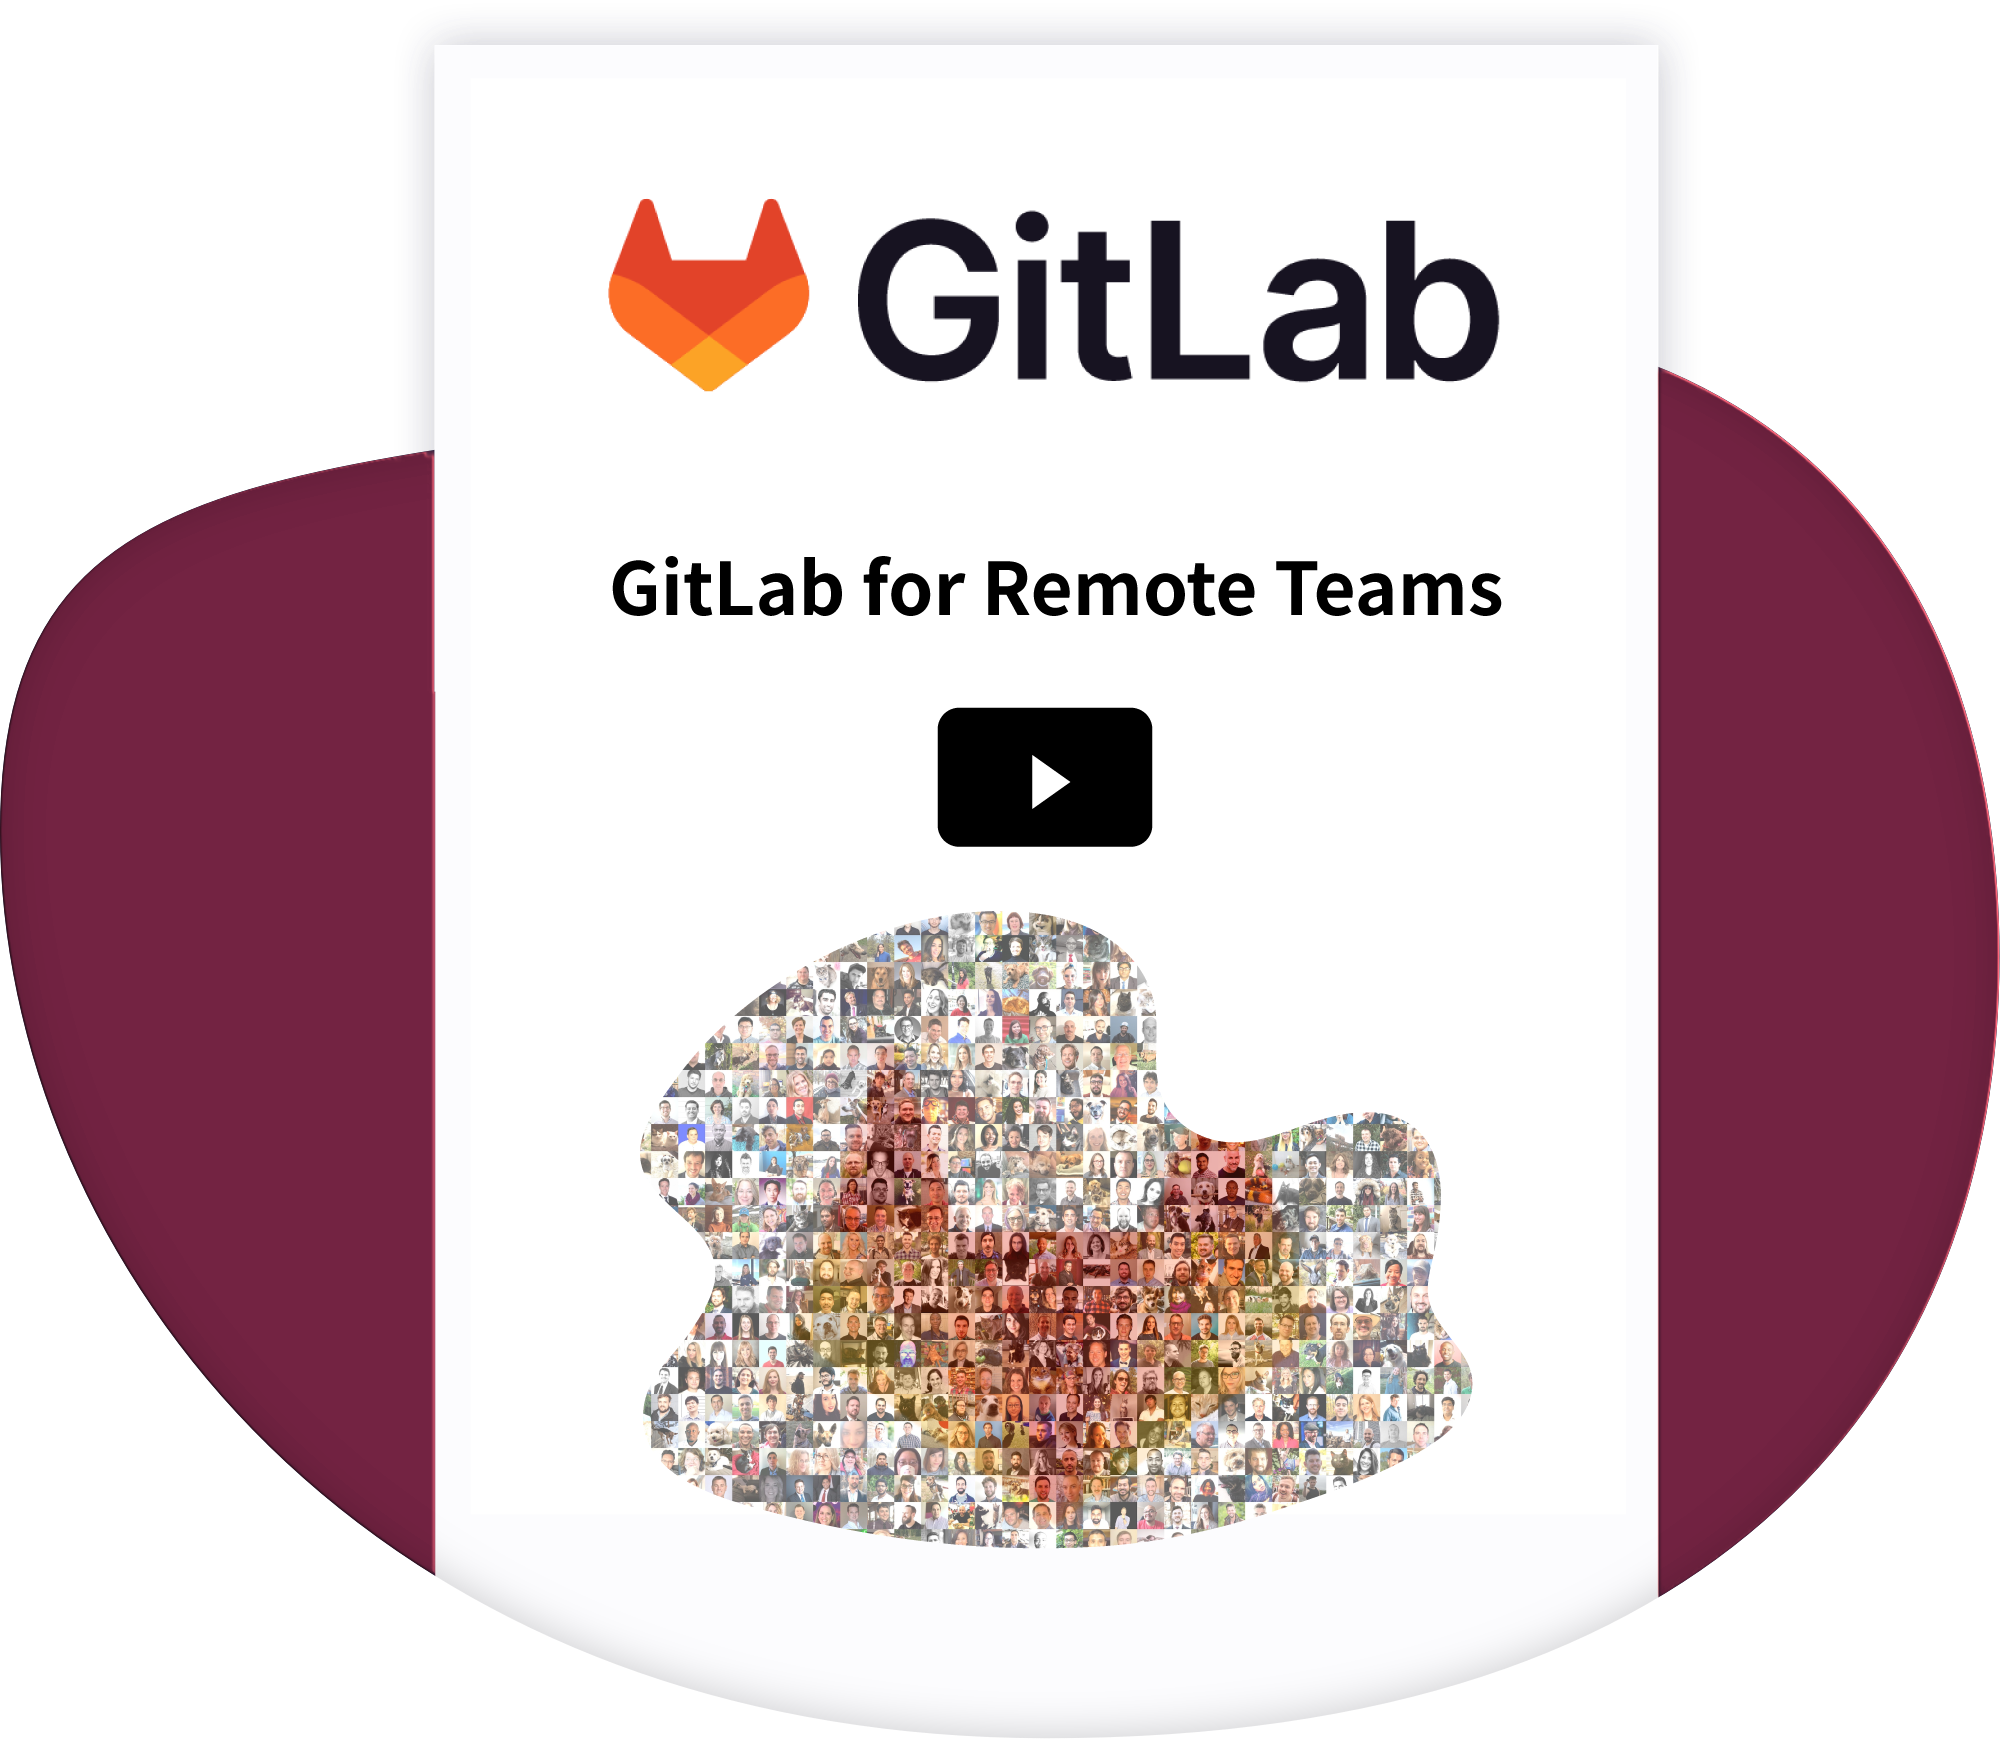 007_Gitlab-for-Remote-Teams-image